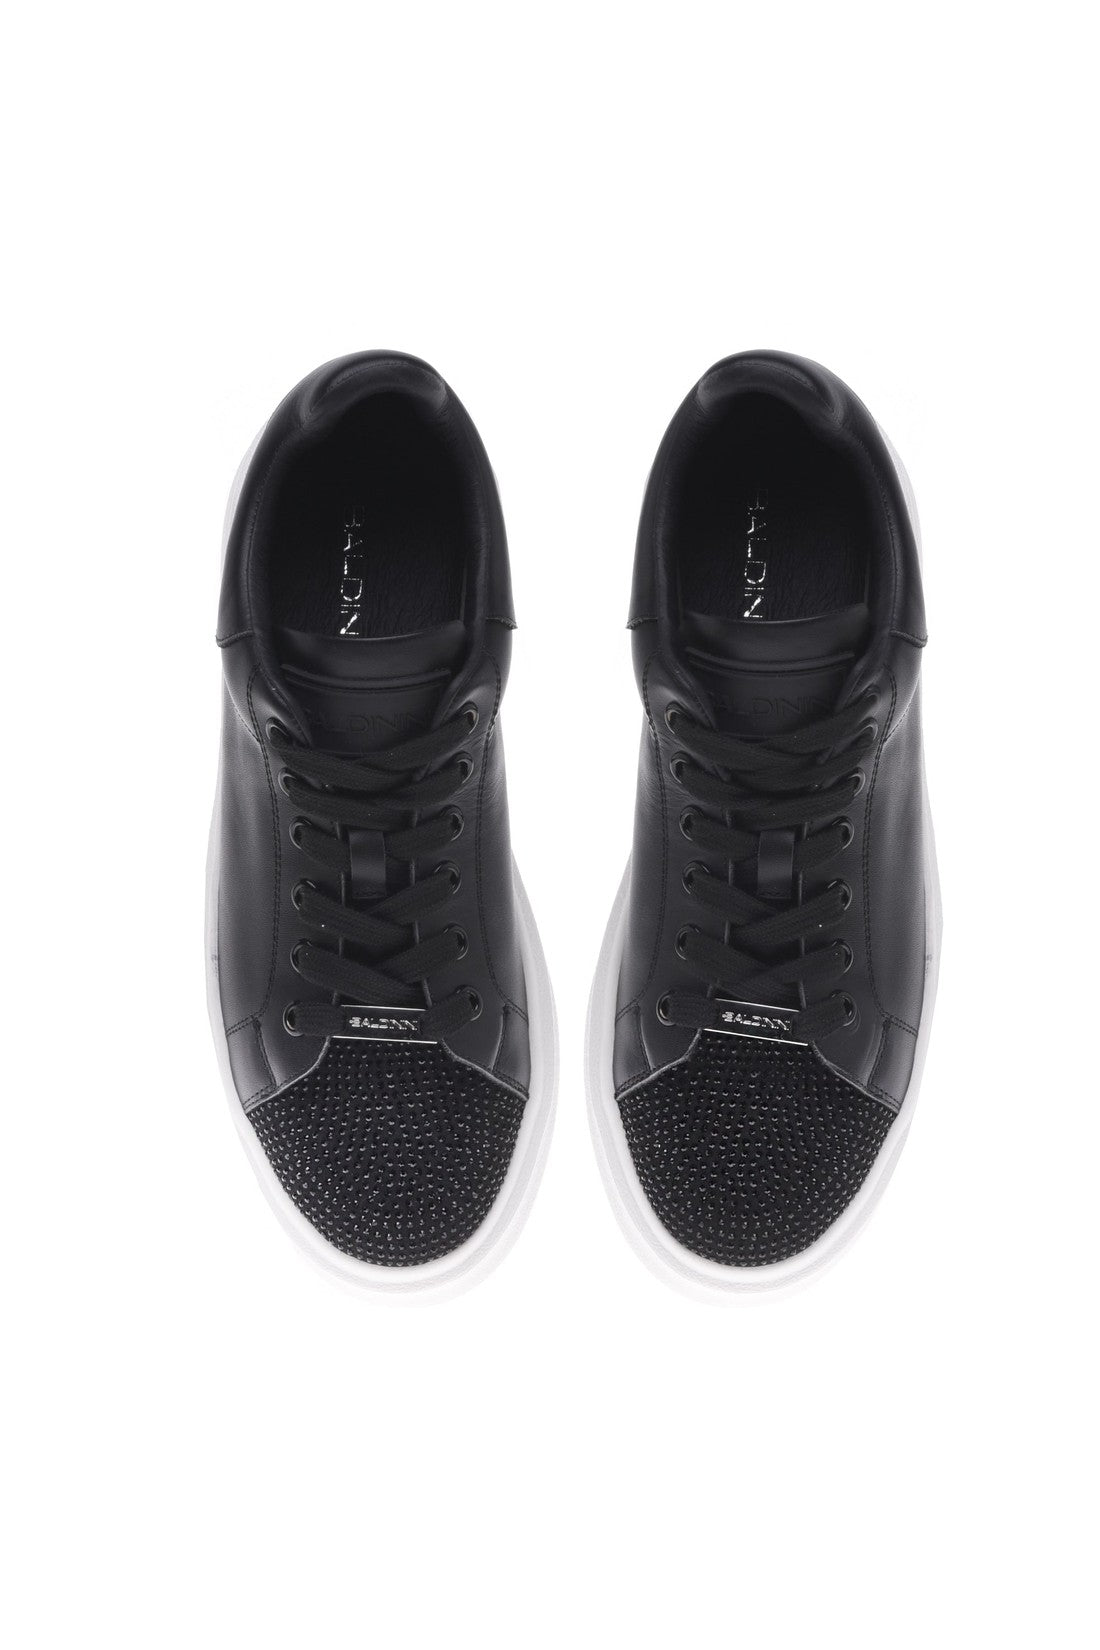 BALDININI-OUTLET-SALE-Sneaker-in-black-calfskin-with-rhinestones-Sneaker-ARCHIVE-COLLECTION-2_bd3a06e5-183d-4825-930b-0612bf53da4d.jpg